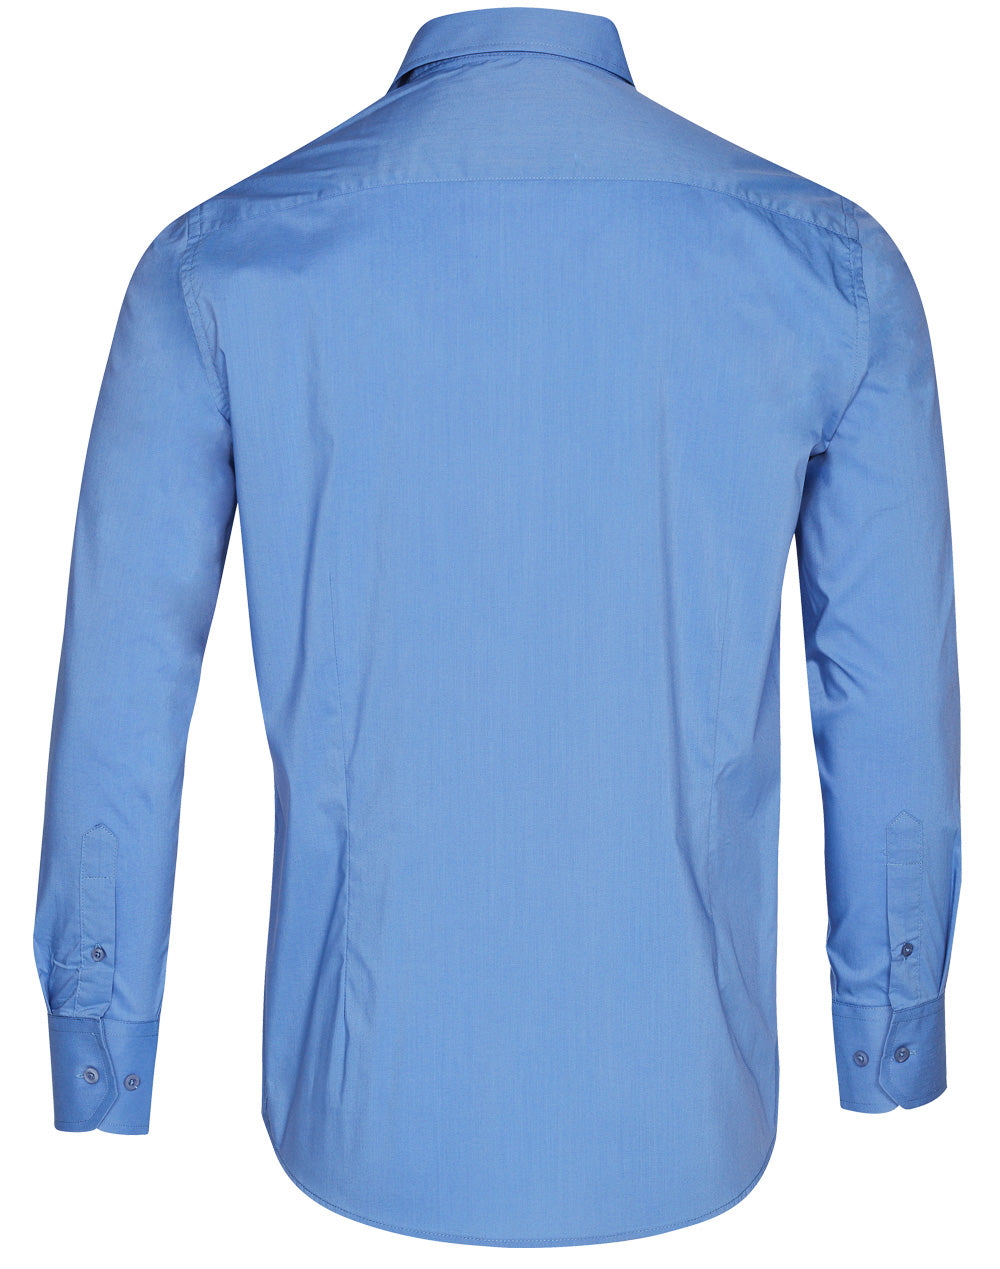 Winning Spirit-Men's Teflon Executive Long Sleeve Shirt-BS08L